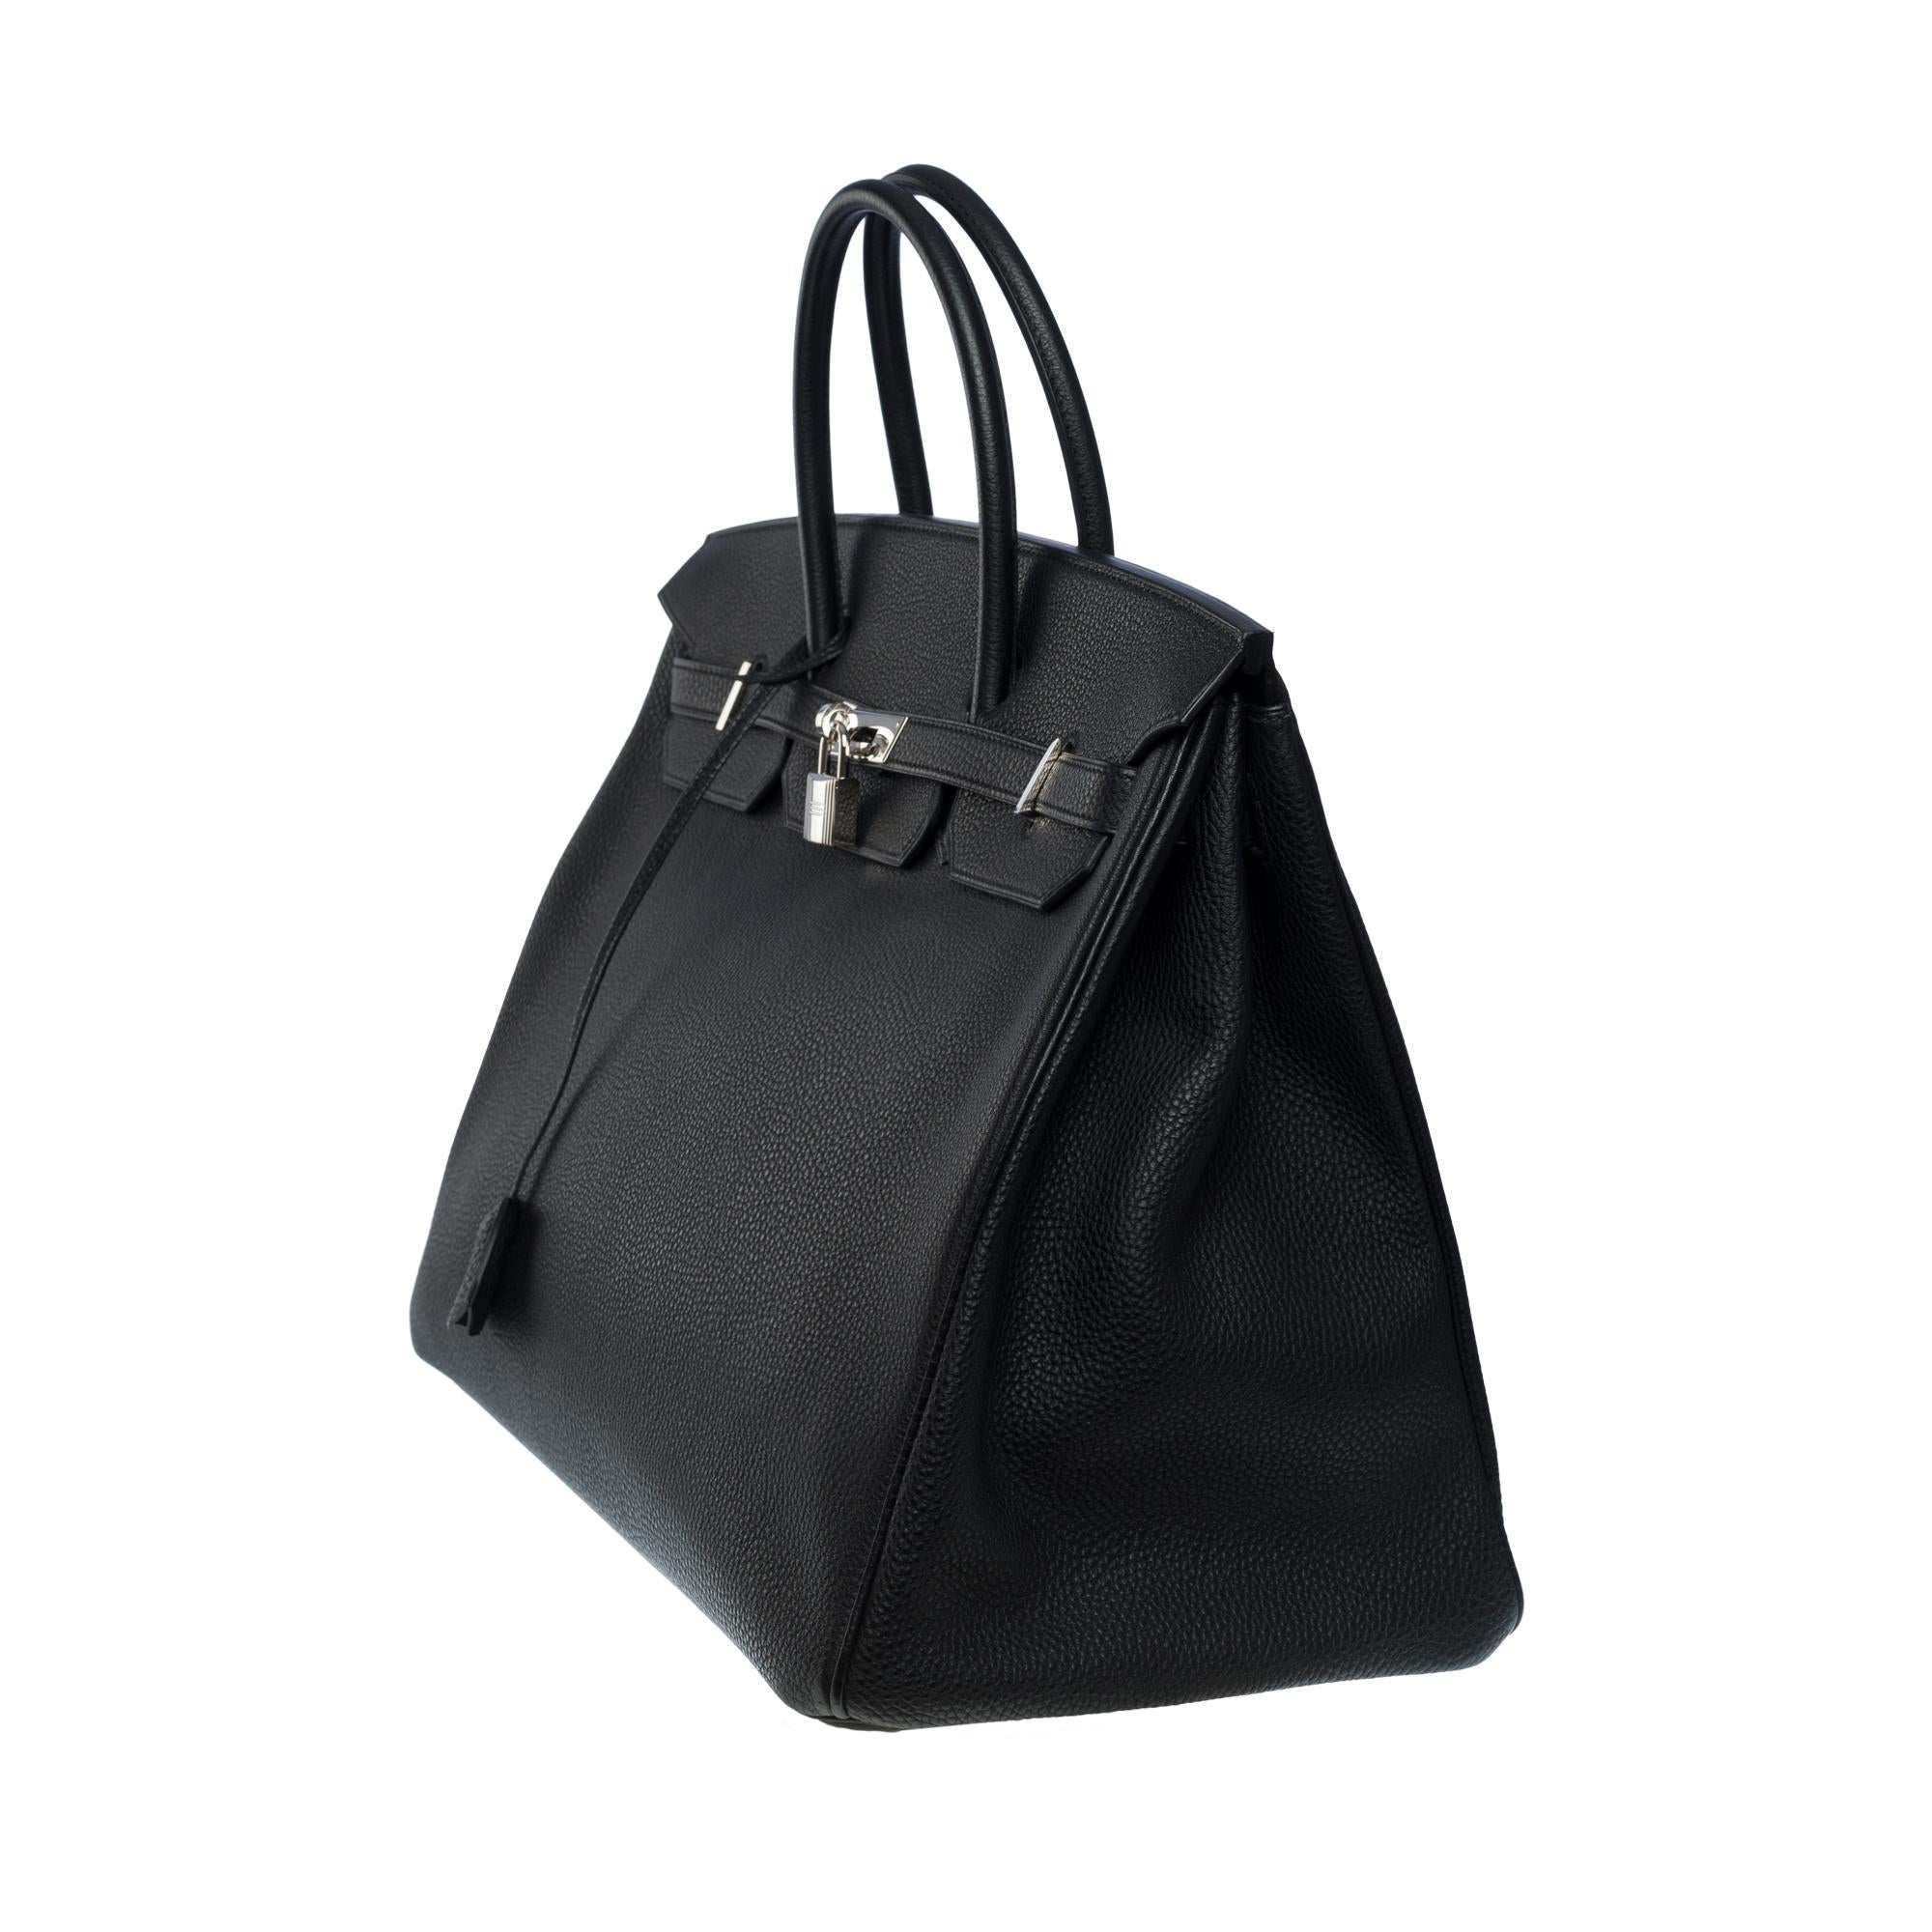  Superbe sac à main Hermès Birkin 40 cm en cuir togo noir, SHW Unisexe 